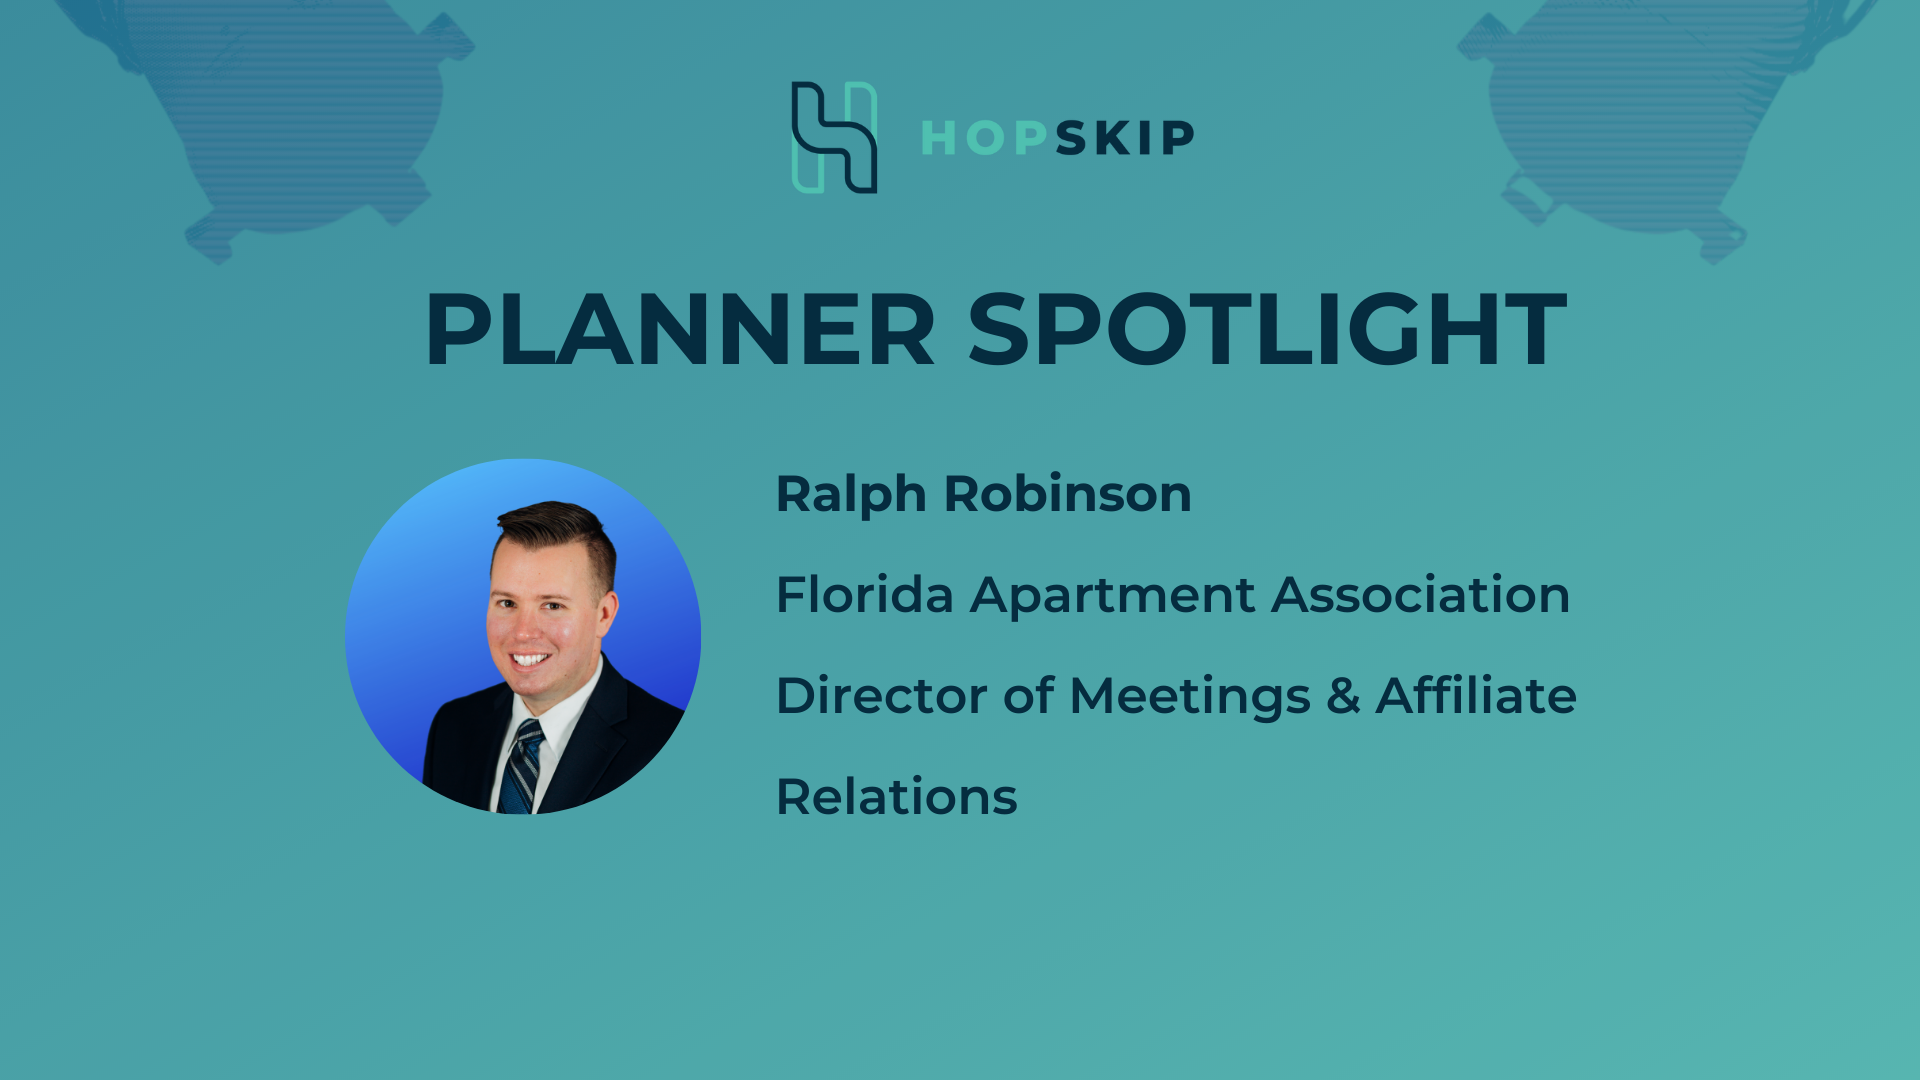 Ralph Robinson HopSkip Planner Spotlight Series